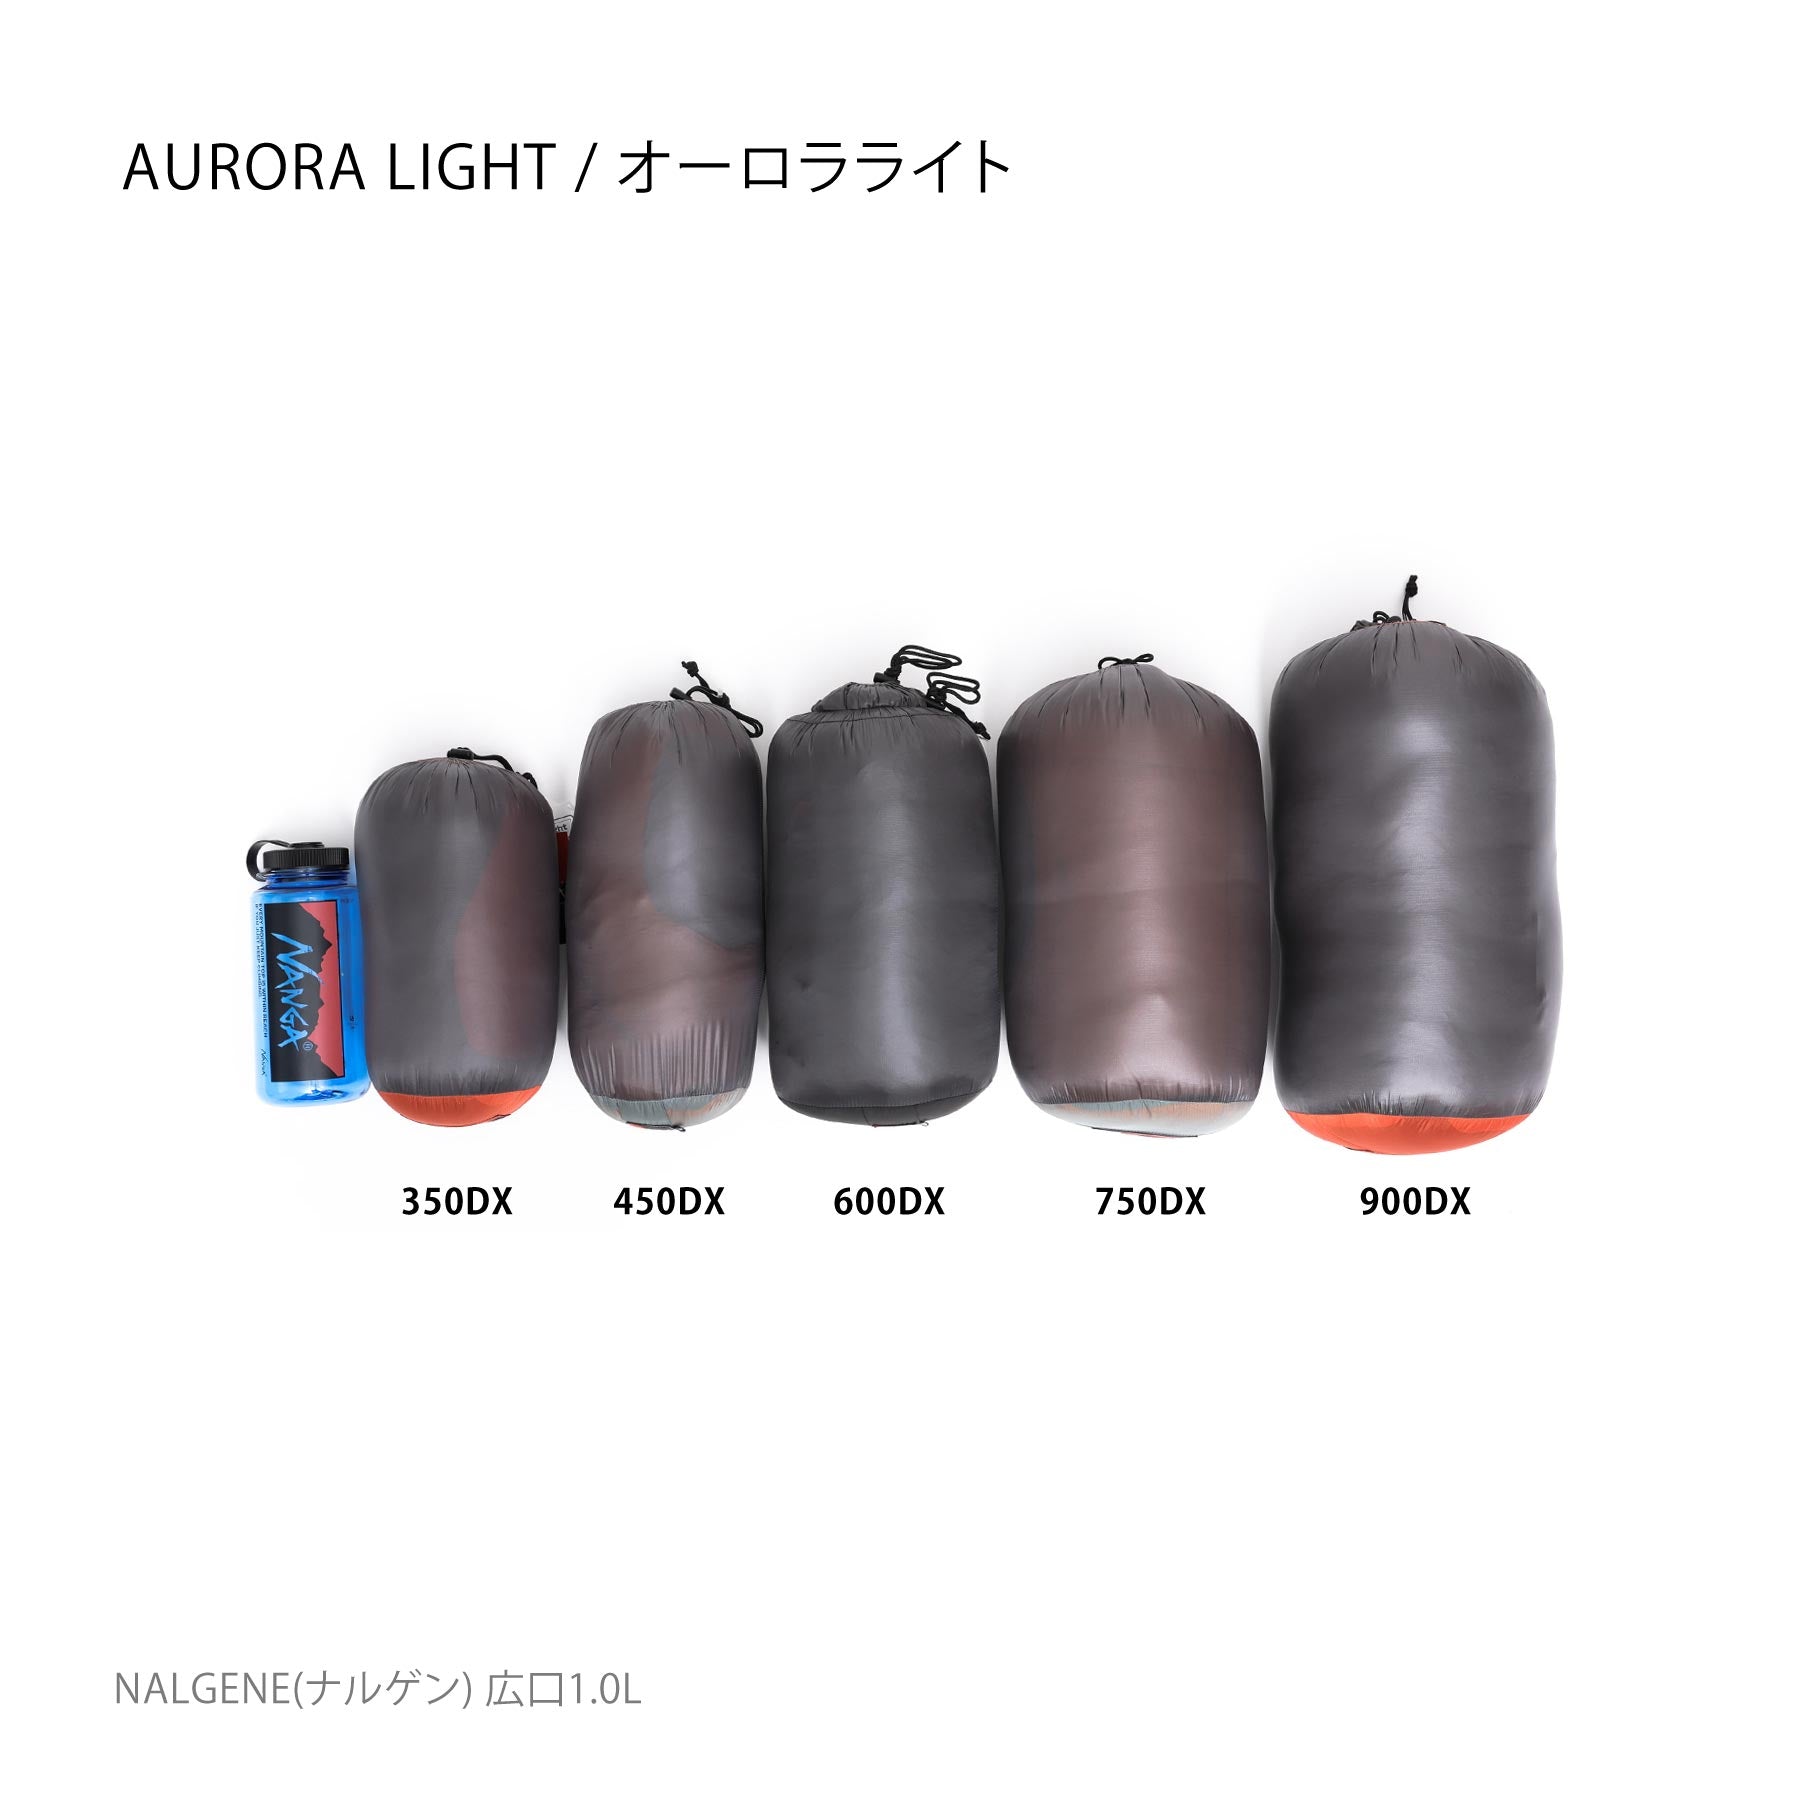 AURORA light 350 DX / オーロラライト350DX – NANGA ONLINE SHOP